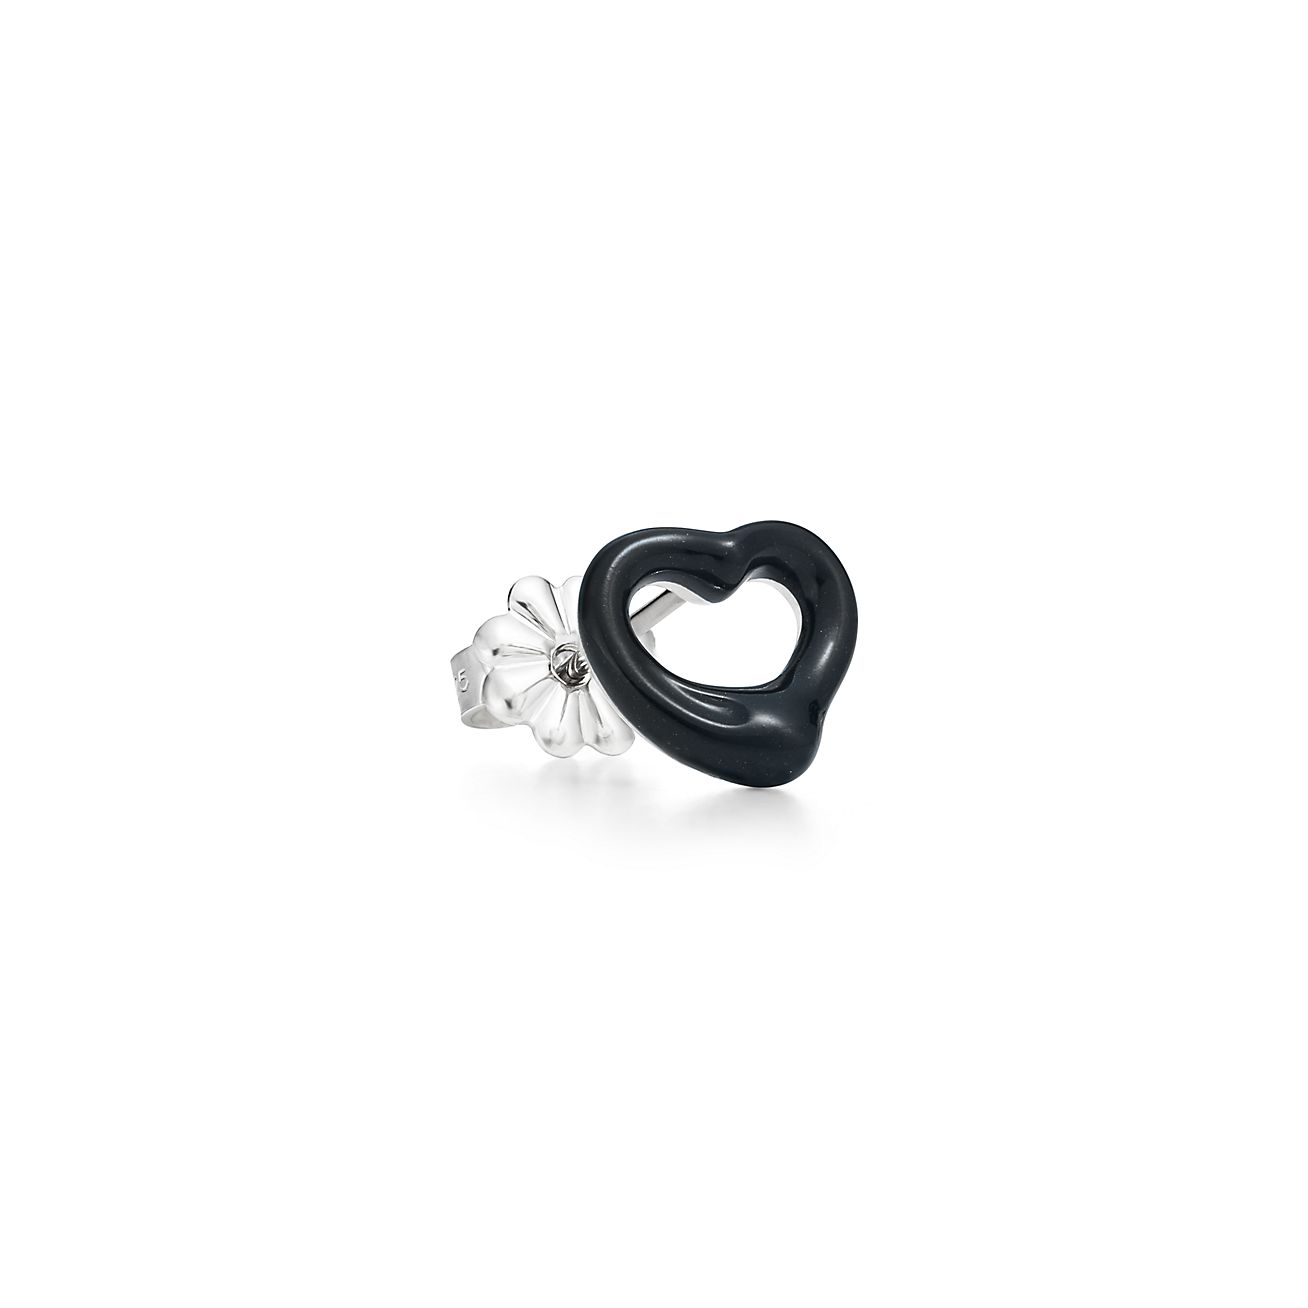 Elsa Peretti® Open Heart earrings of black jade and sterling 